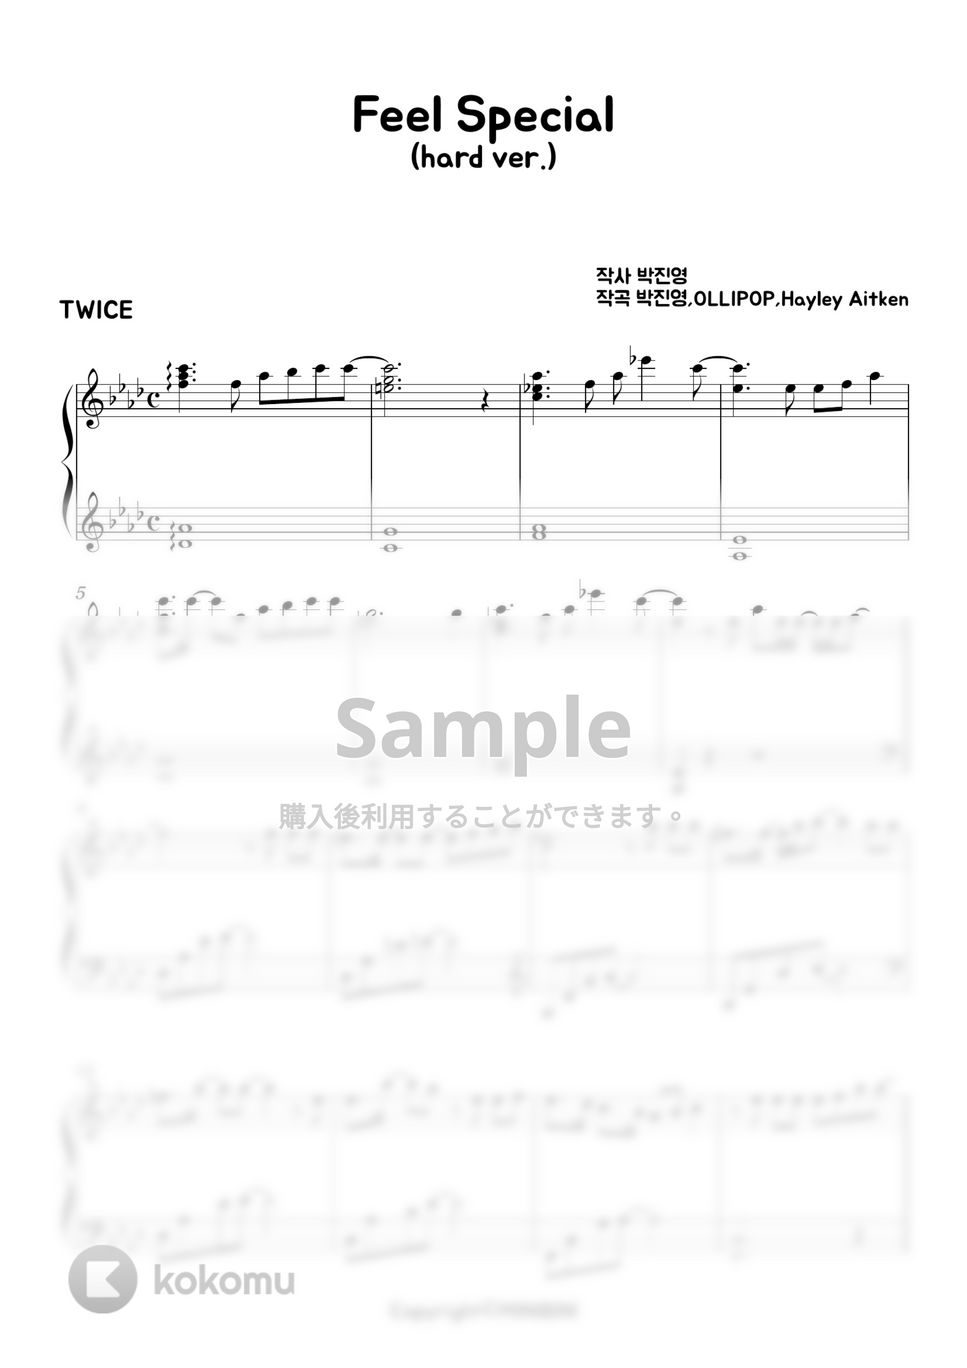 Twice - Feel Special (Hard ver.) by MINIBINI